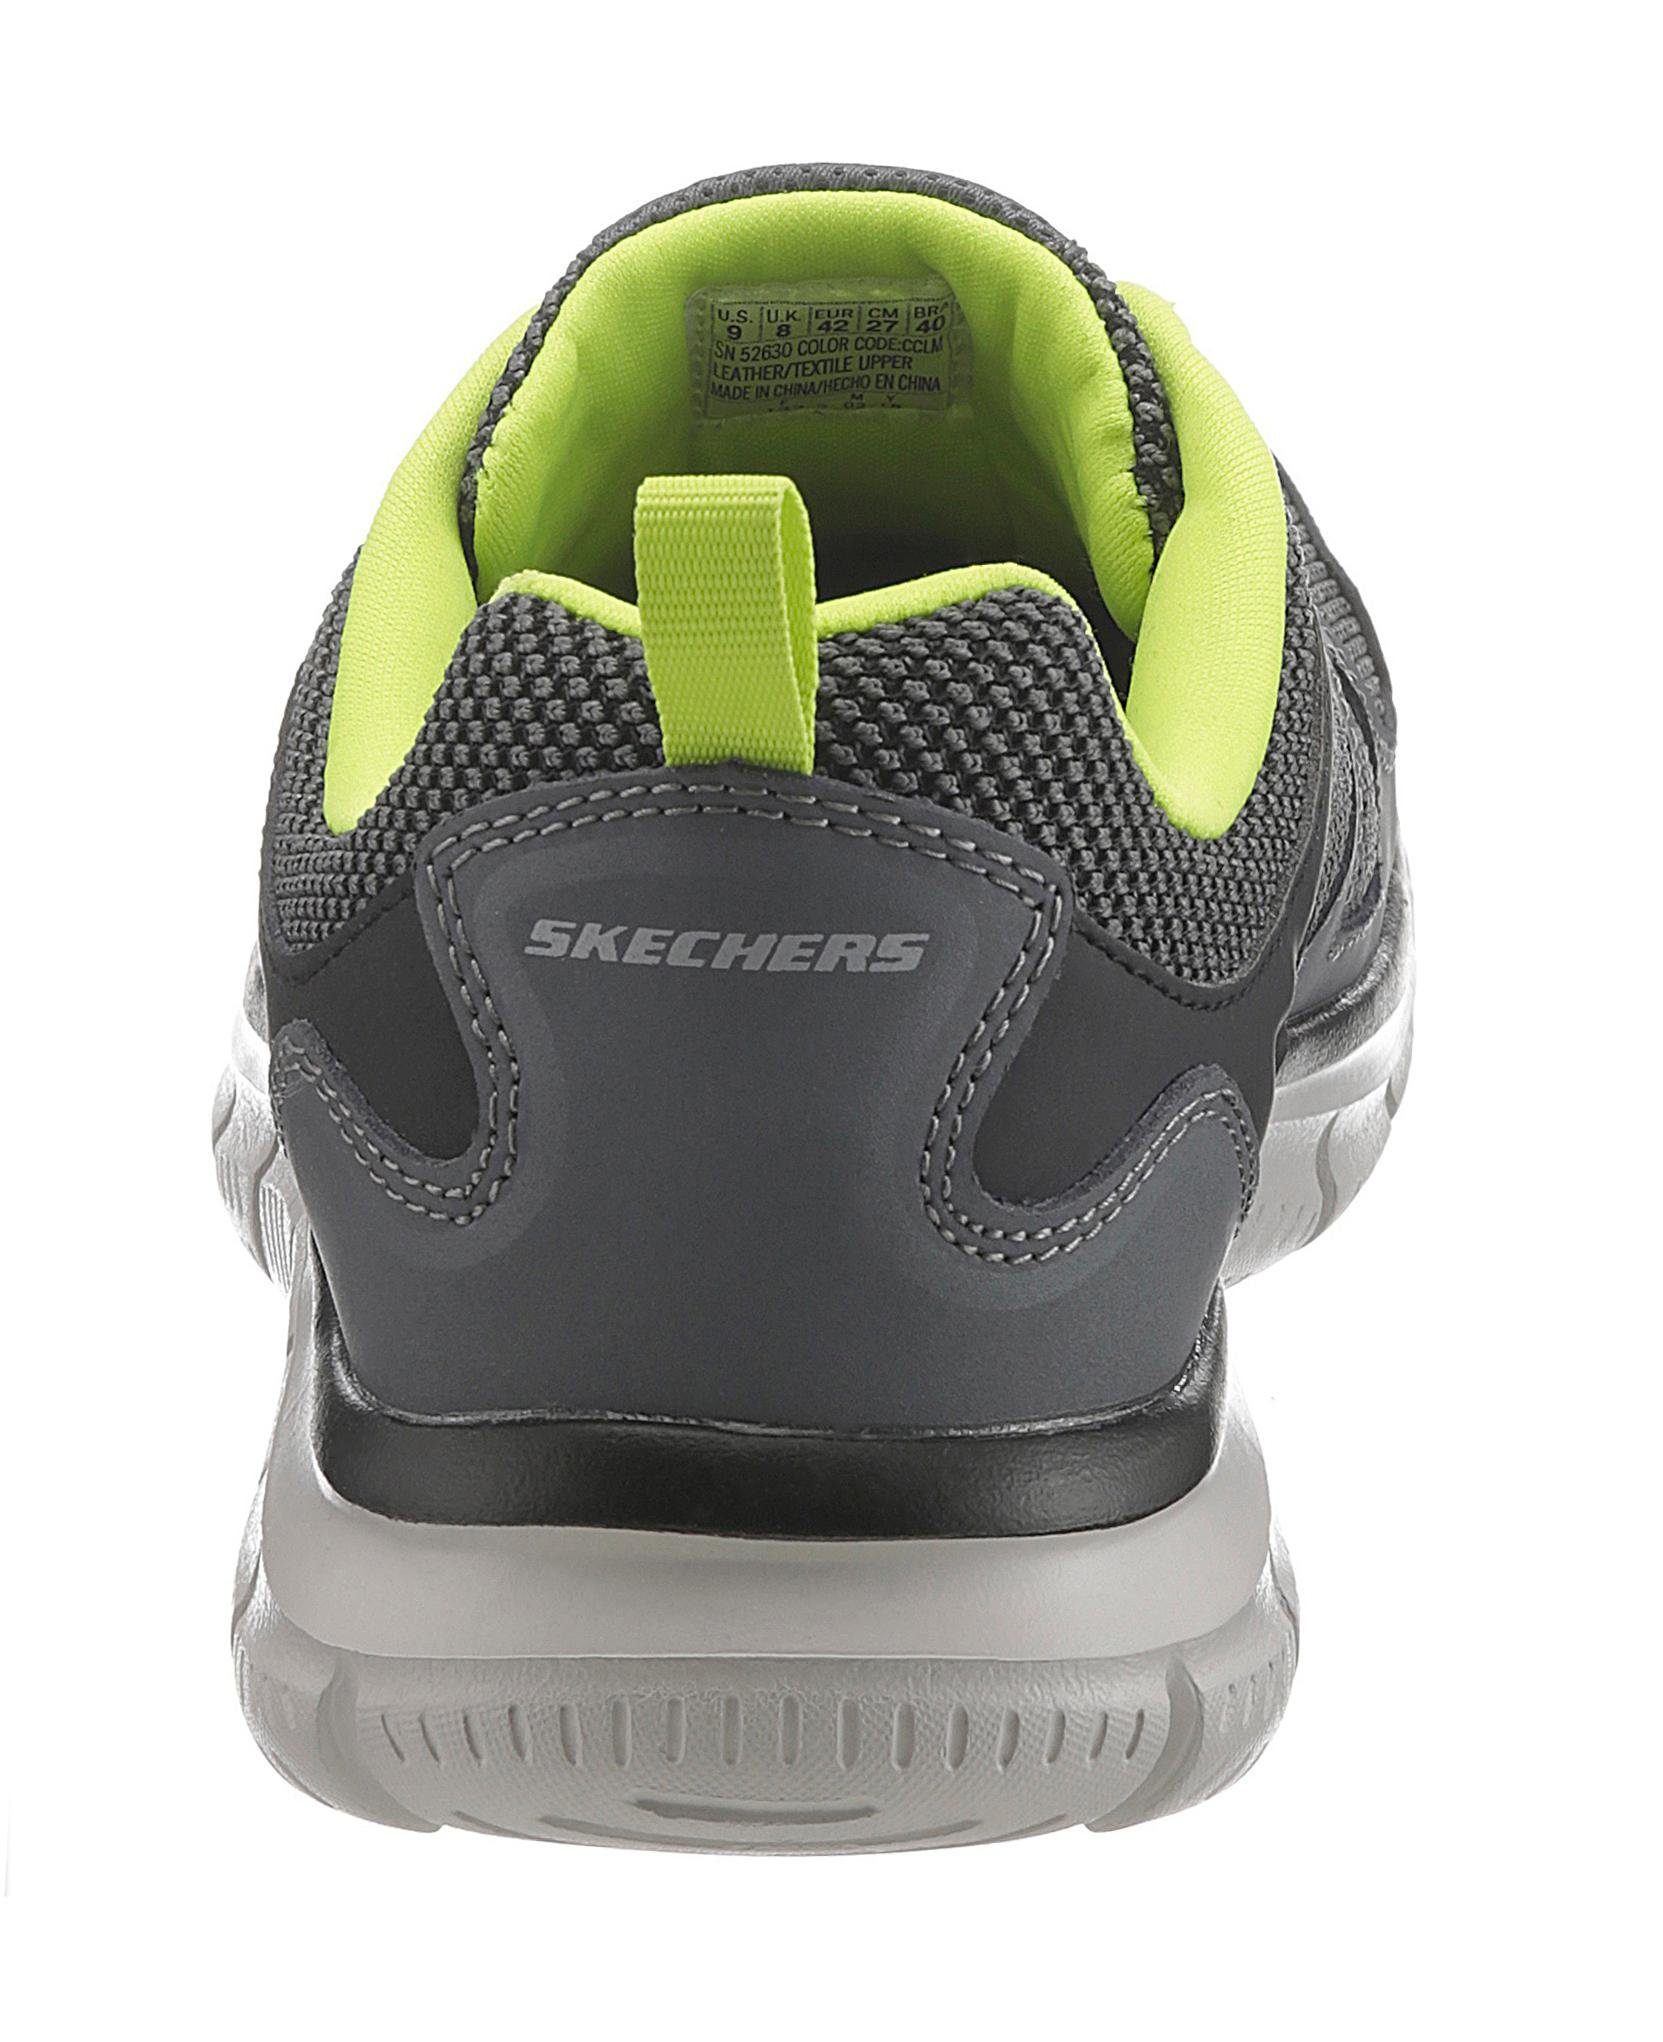 Skechers Track Sneaker mit seitlichem - CCLM Charcoal-Black-Lime / Logo Grau-Schwarz-Grün